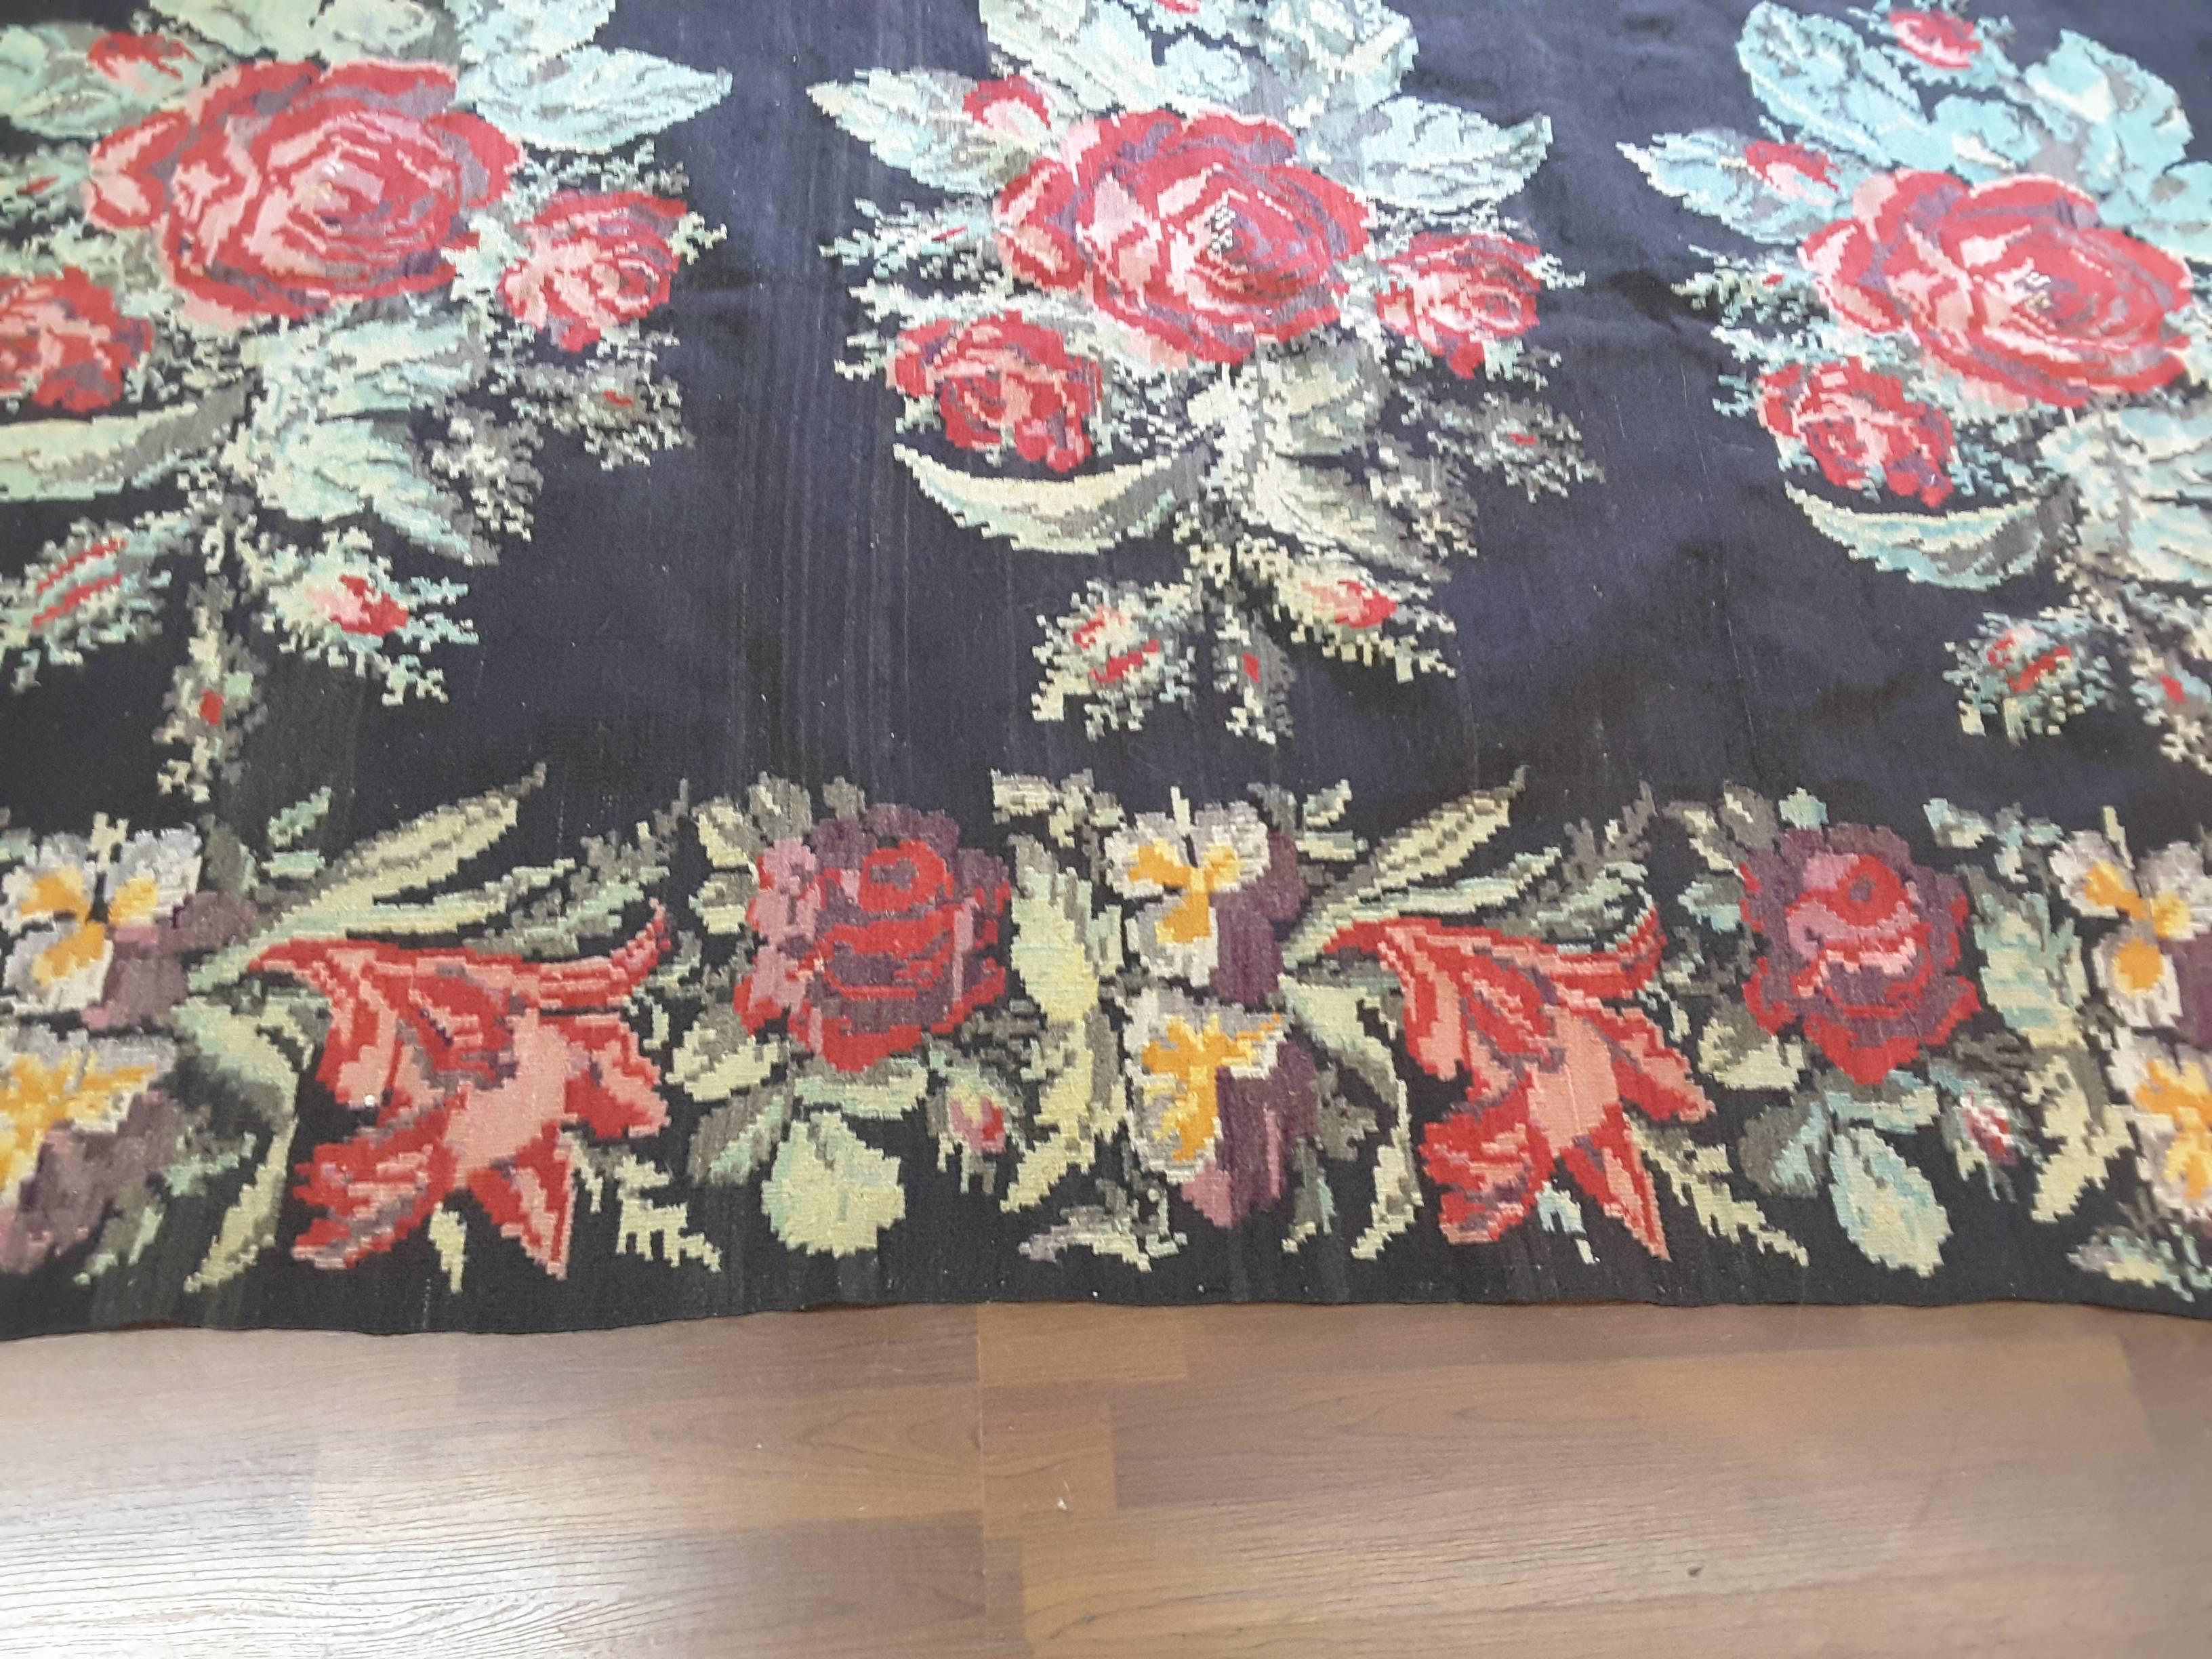 Wool Antique Bessarabian Kilim Carpet For Sale